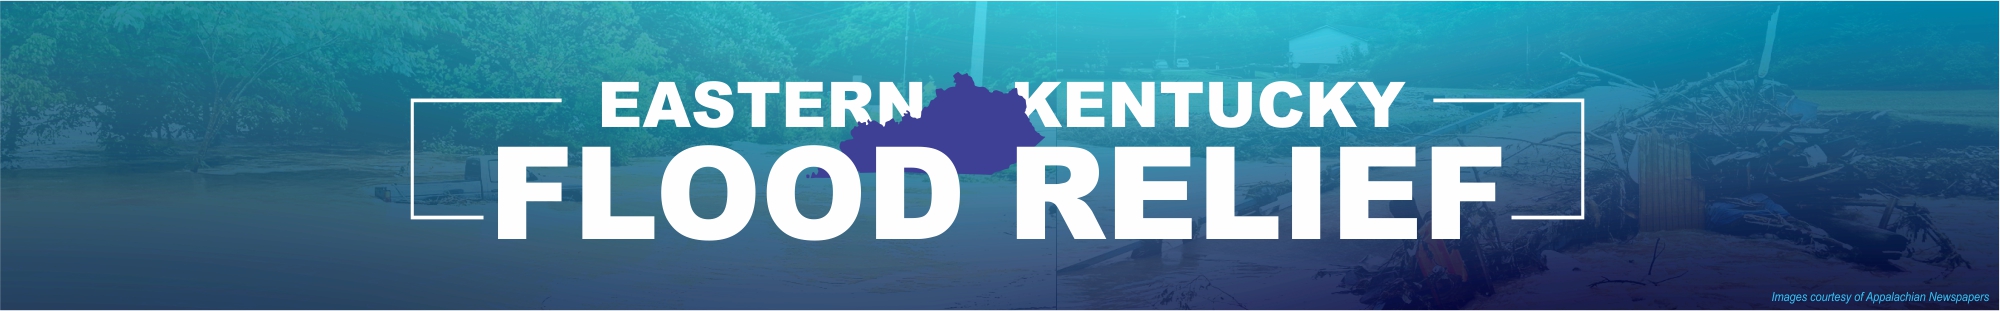 Eastern Kentucky Flood Relief